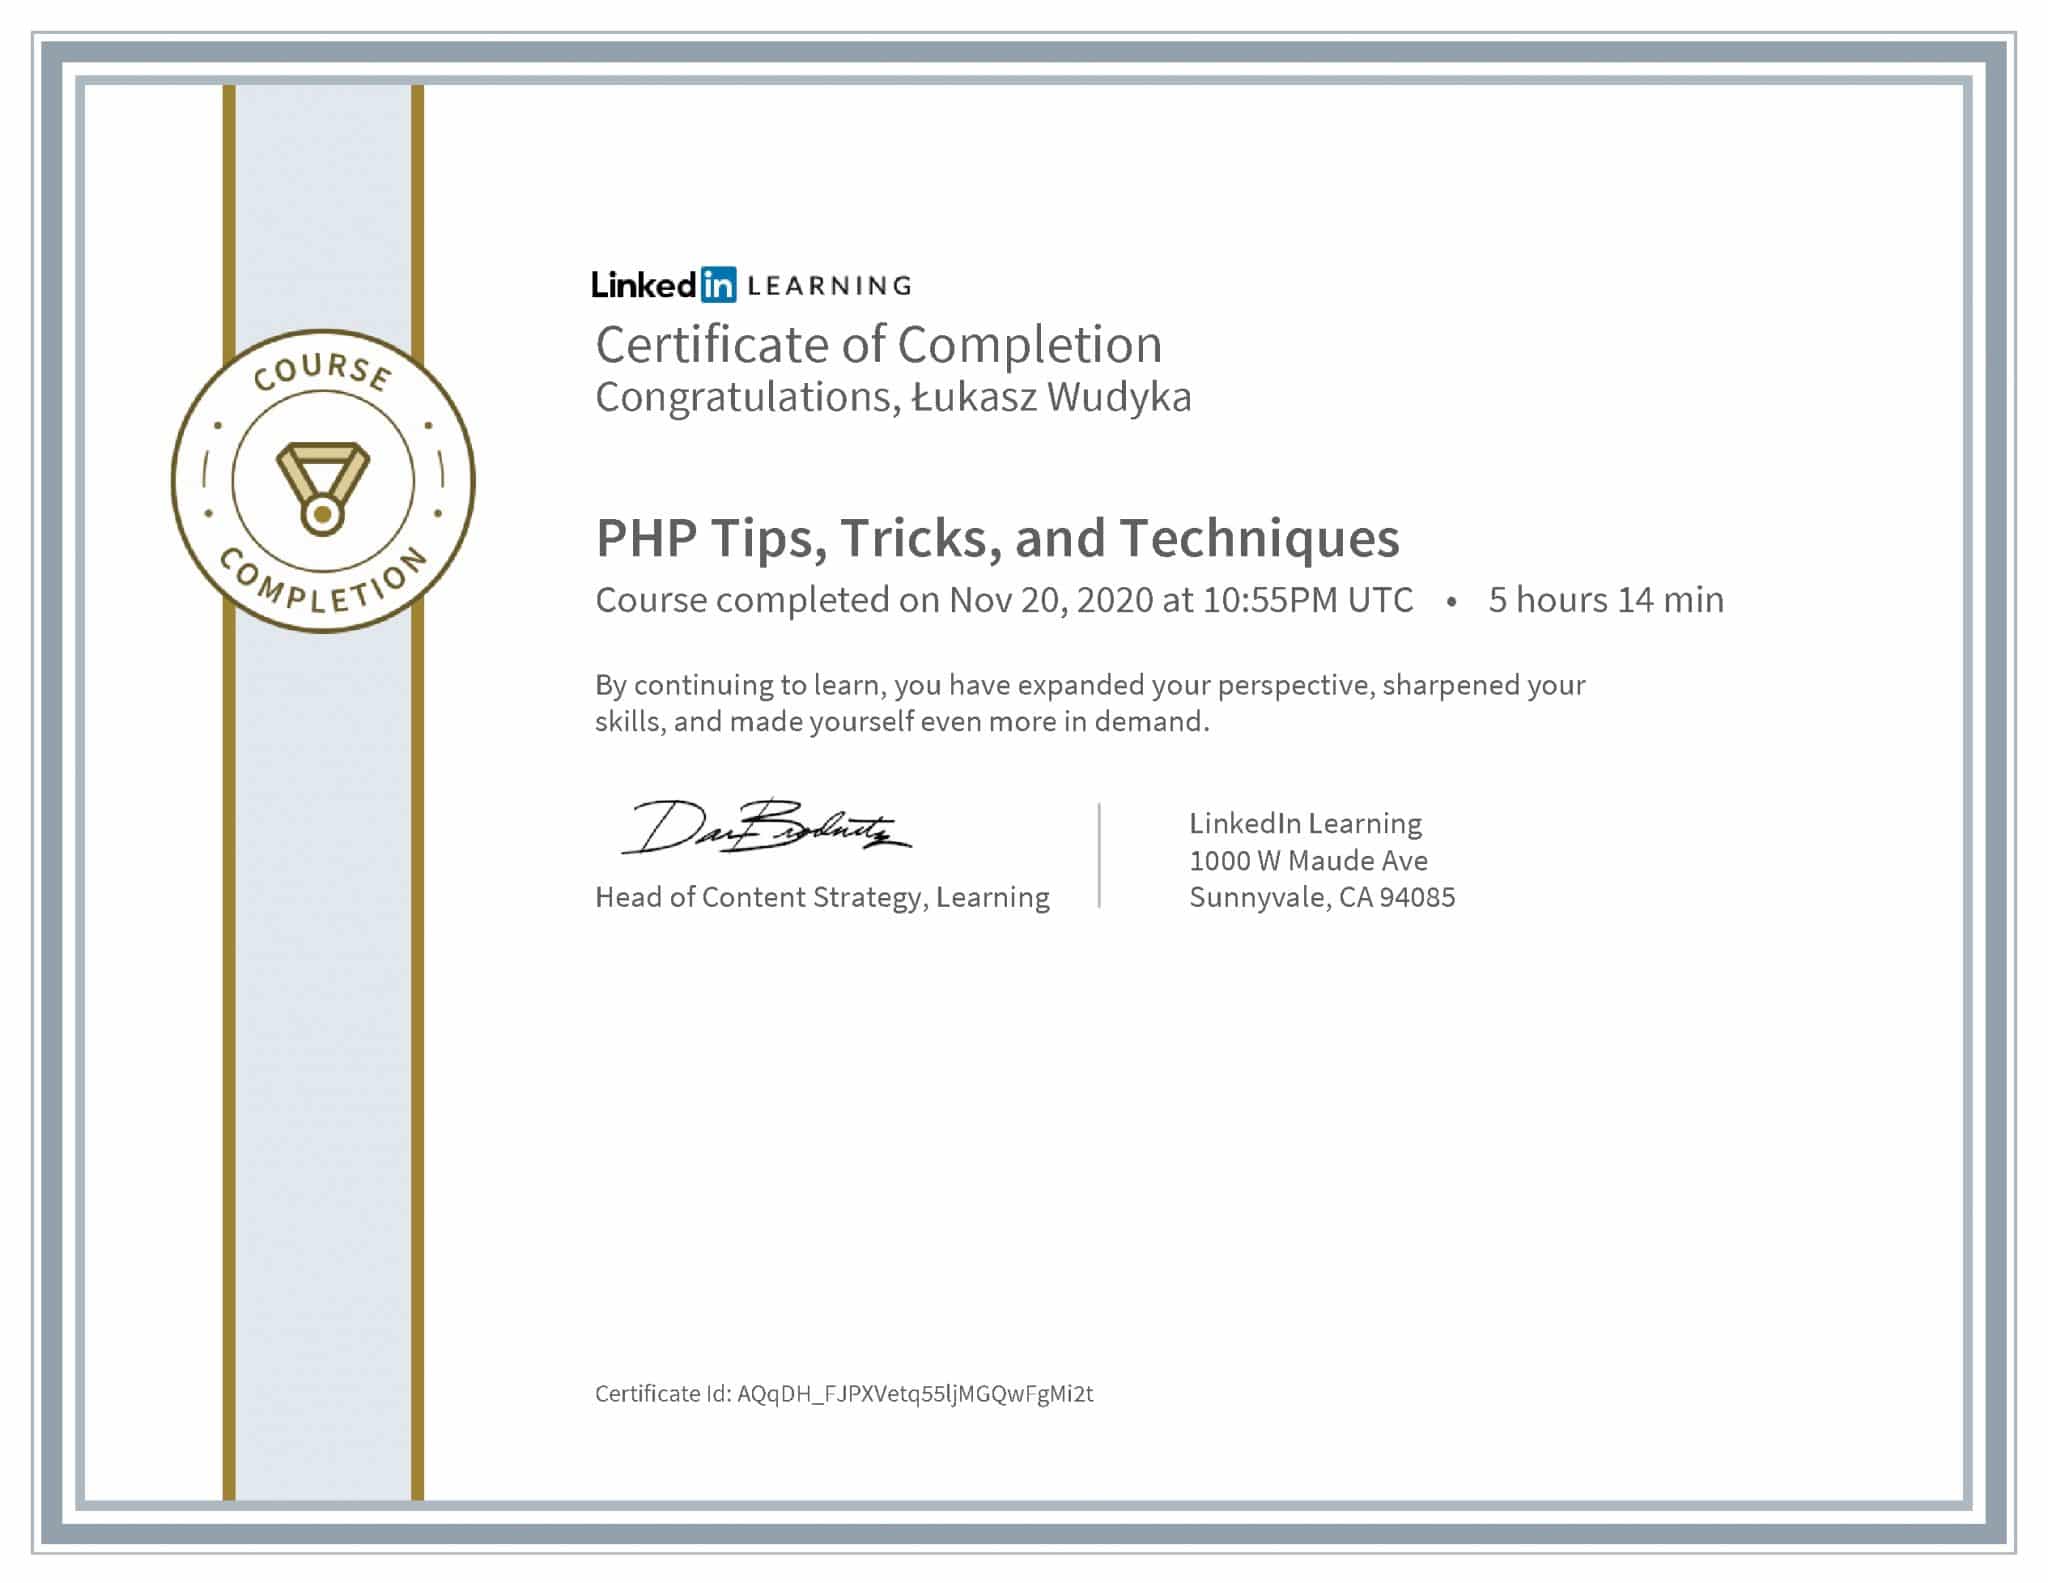 Łukasz Wudyka certyfikat LinkedIn PHP Tips, Tricks, and Techniques